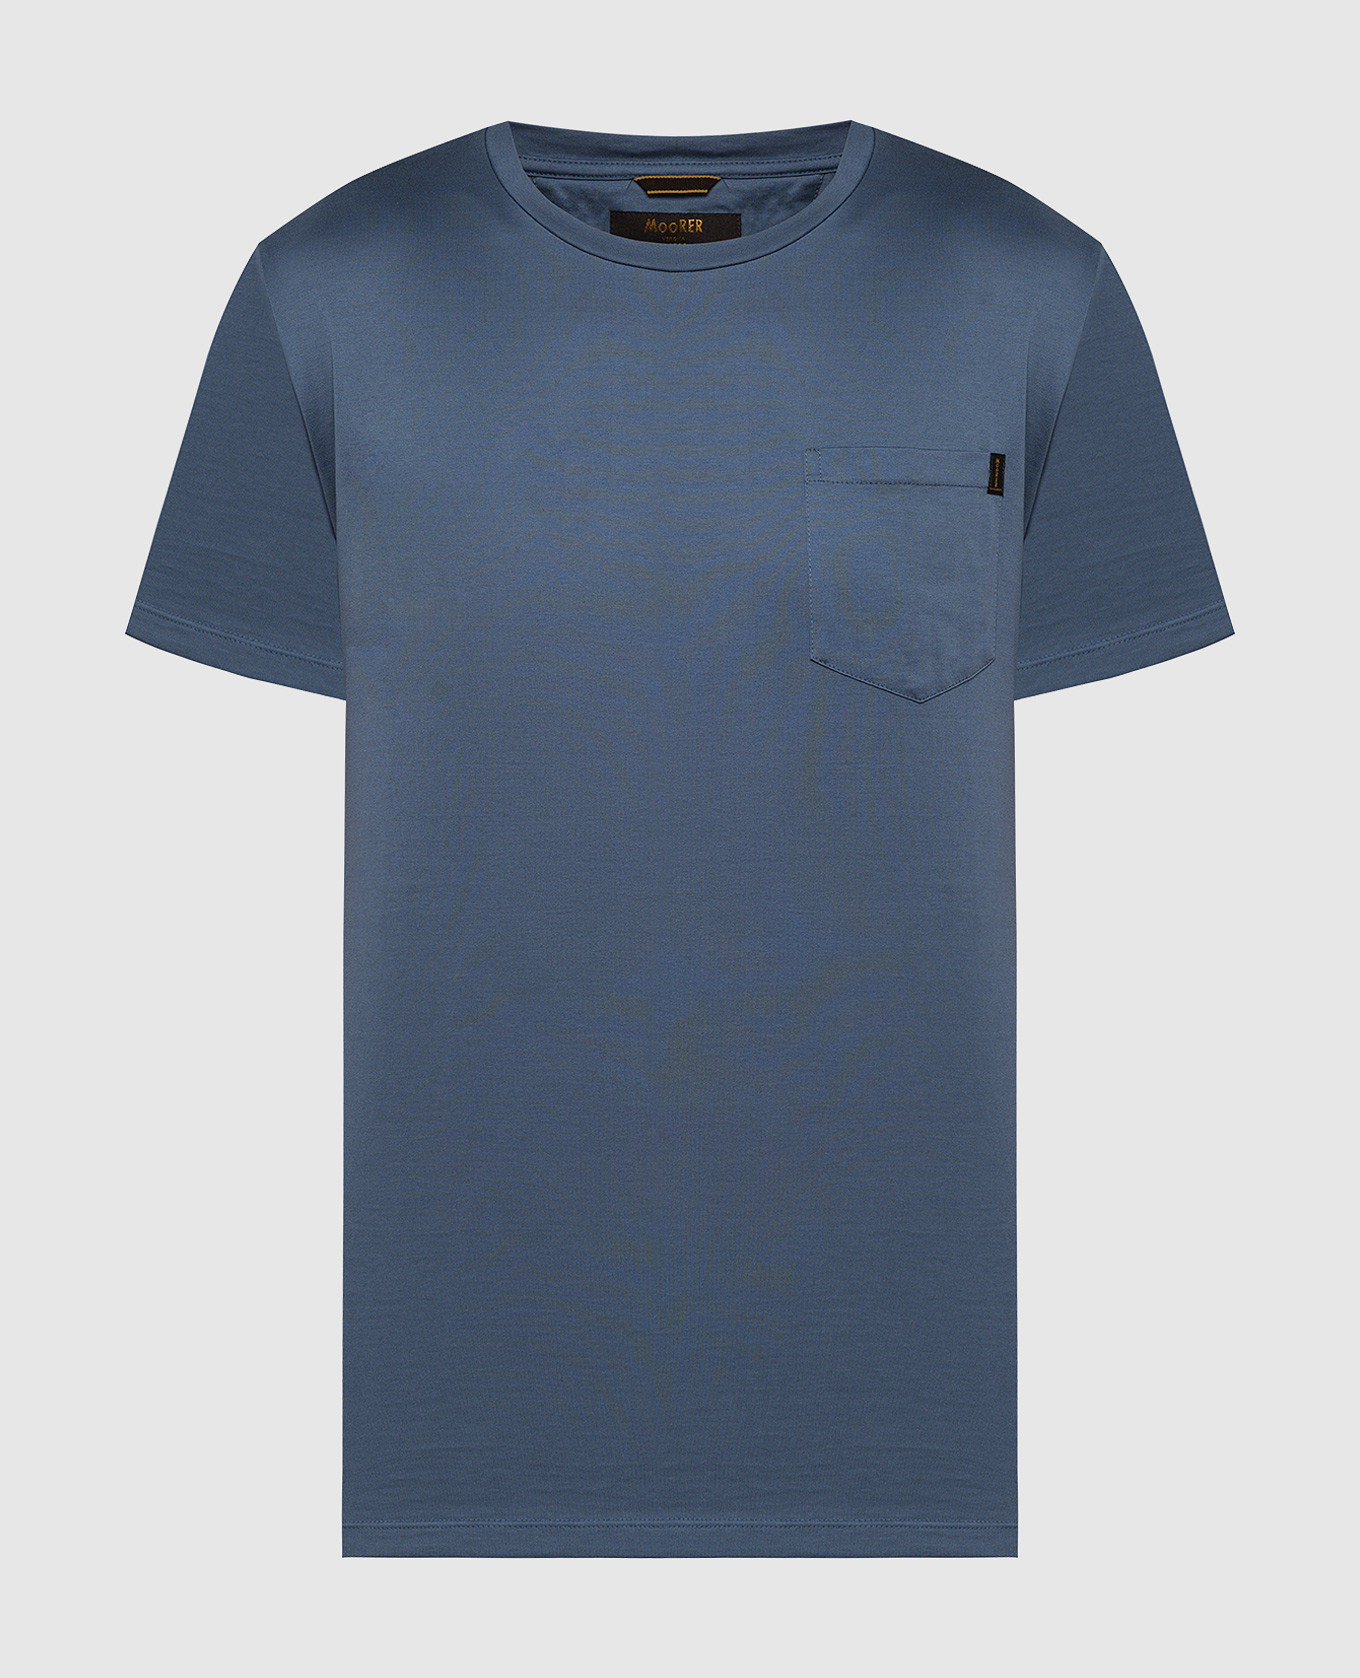 BRUZIO blue t-shirt